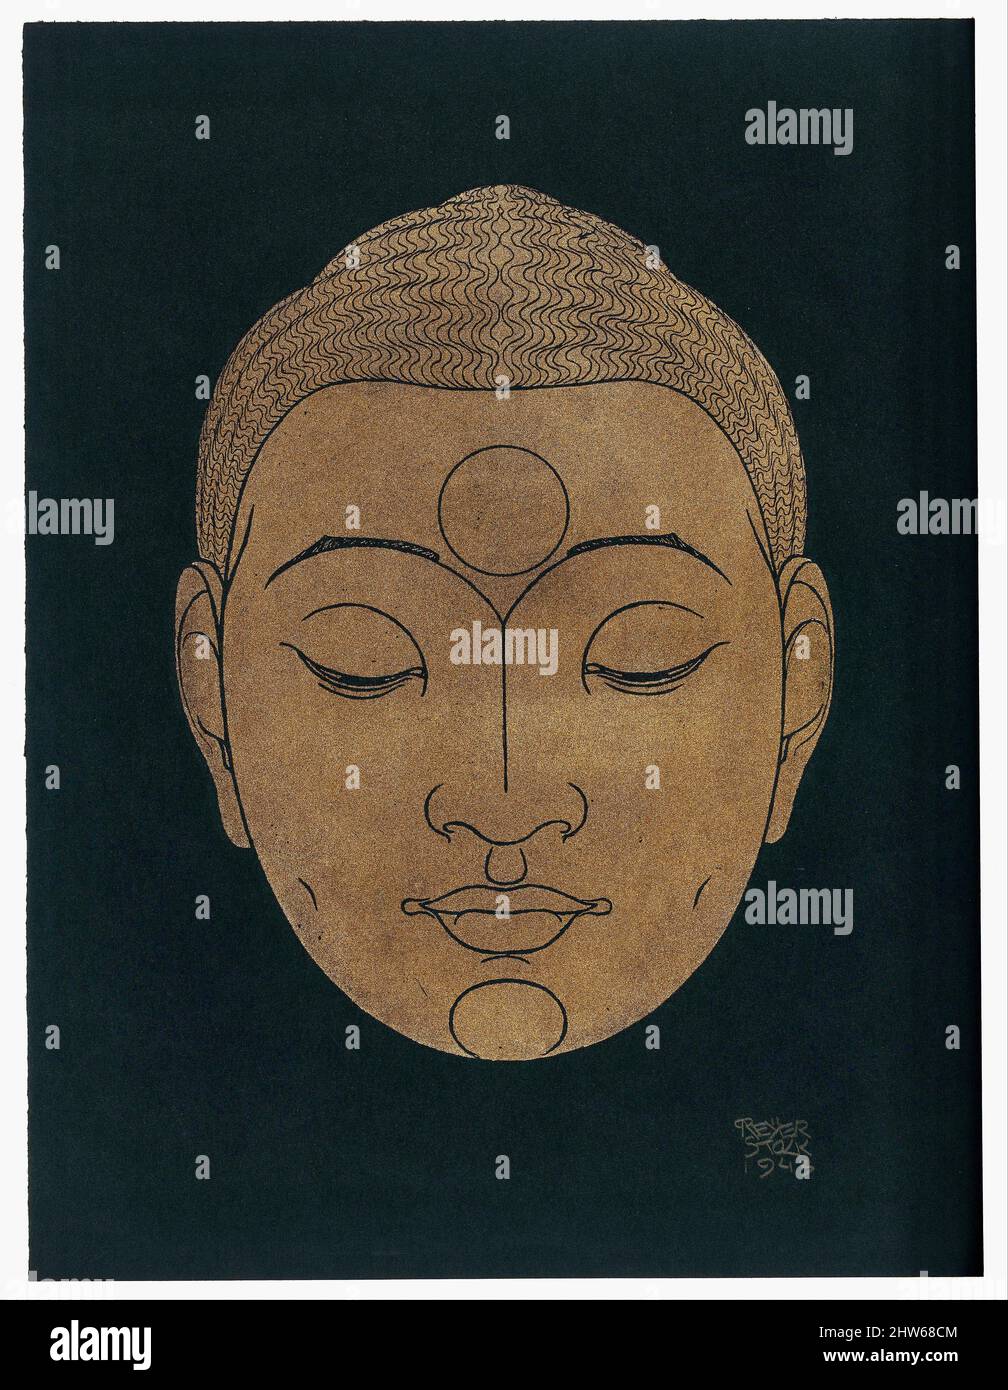 Reijer Stolk - Capo del Buddha - 1943 Foto Stock